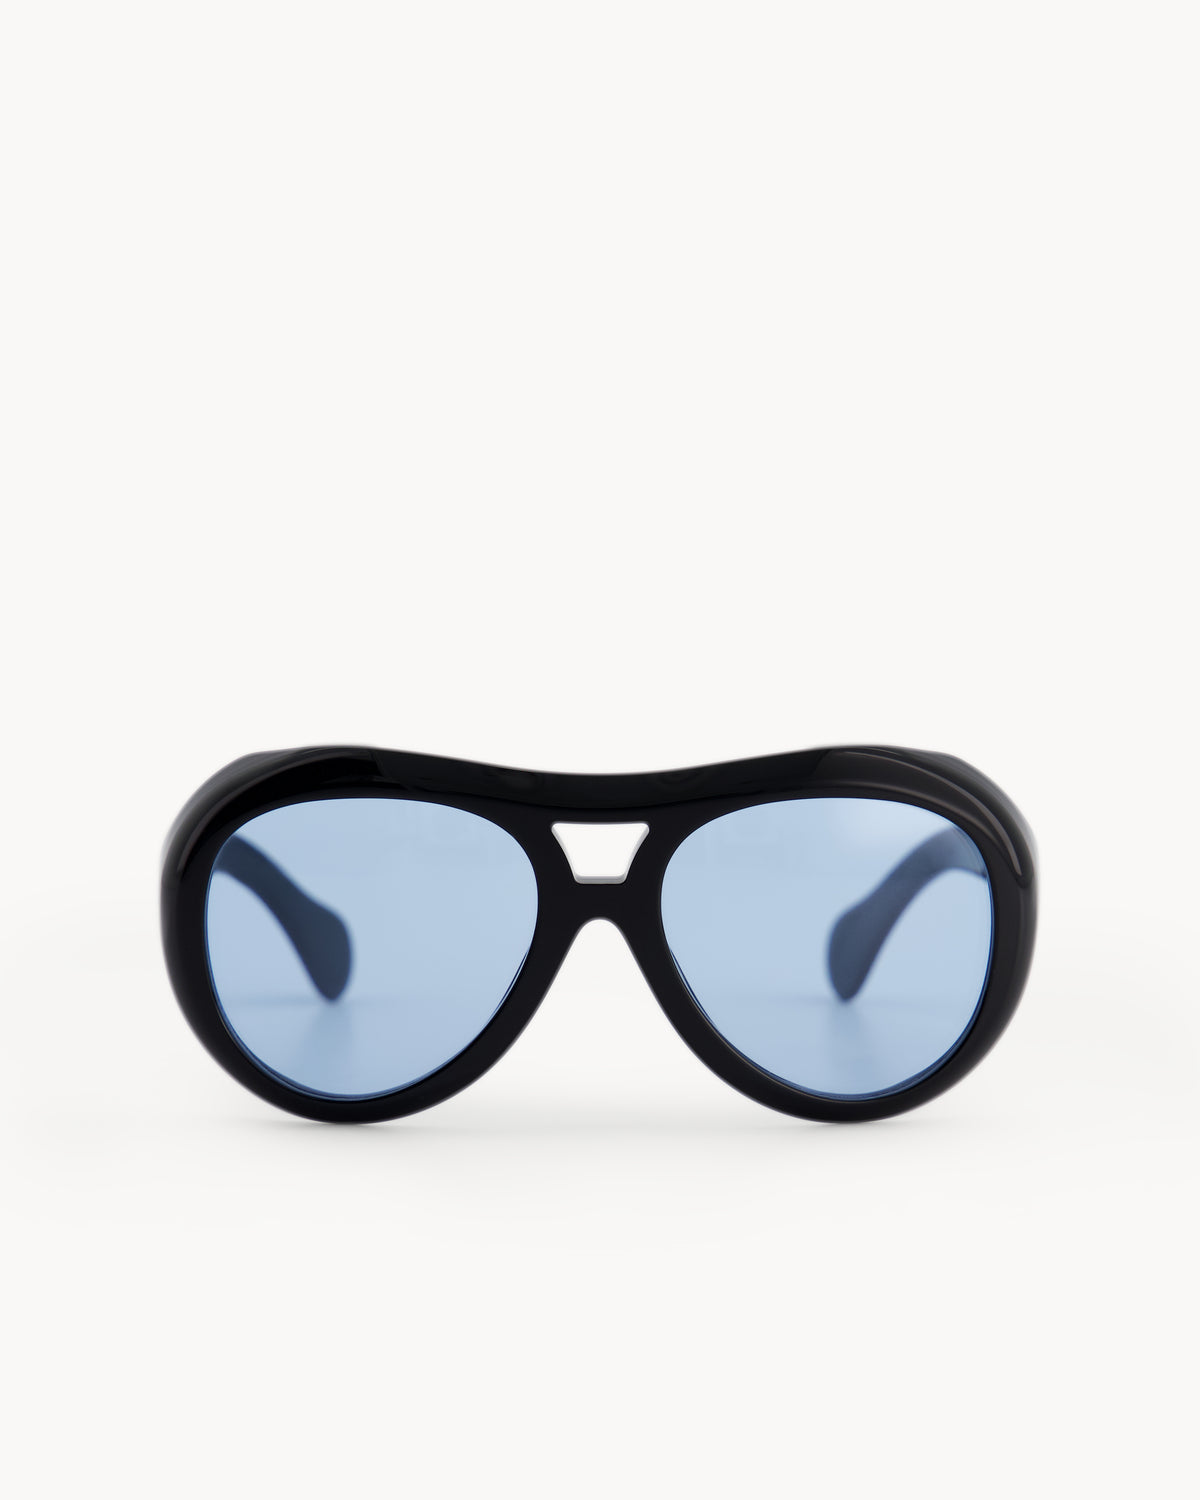 Port Tanger Tayyib Sunglasses in Black Acetate and Rif Blue Lenses 1